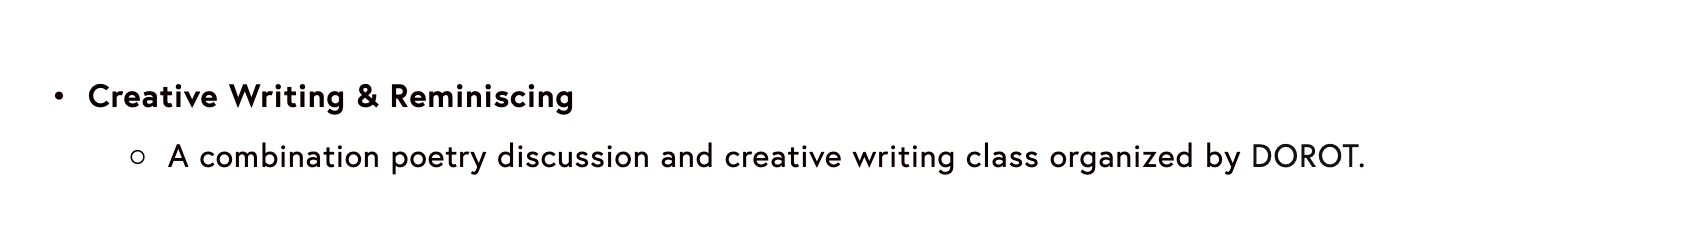 Creative Writing + Reminscing.png